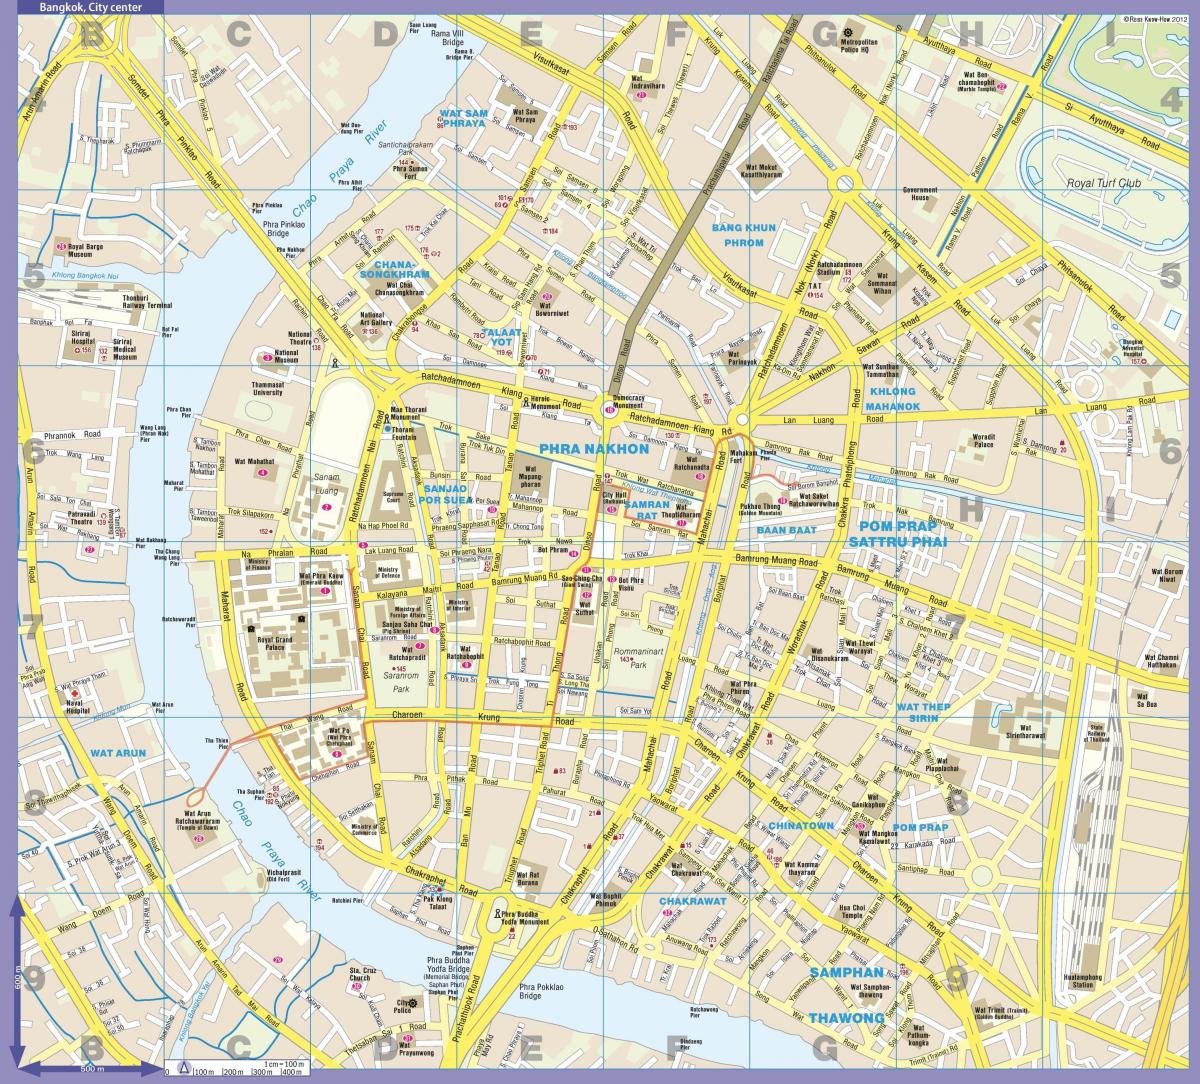 Banguecoque (Krung Thep) mapa do centro da cidade